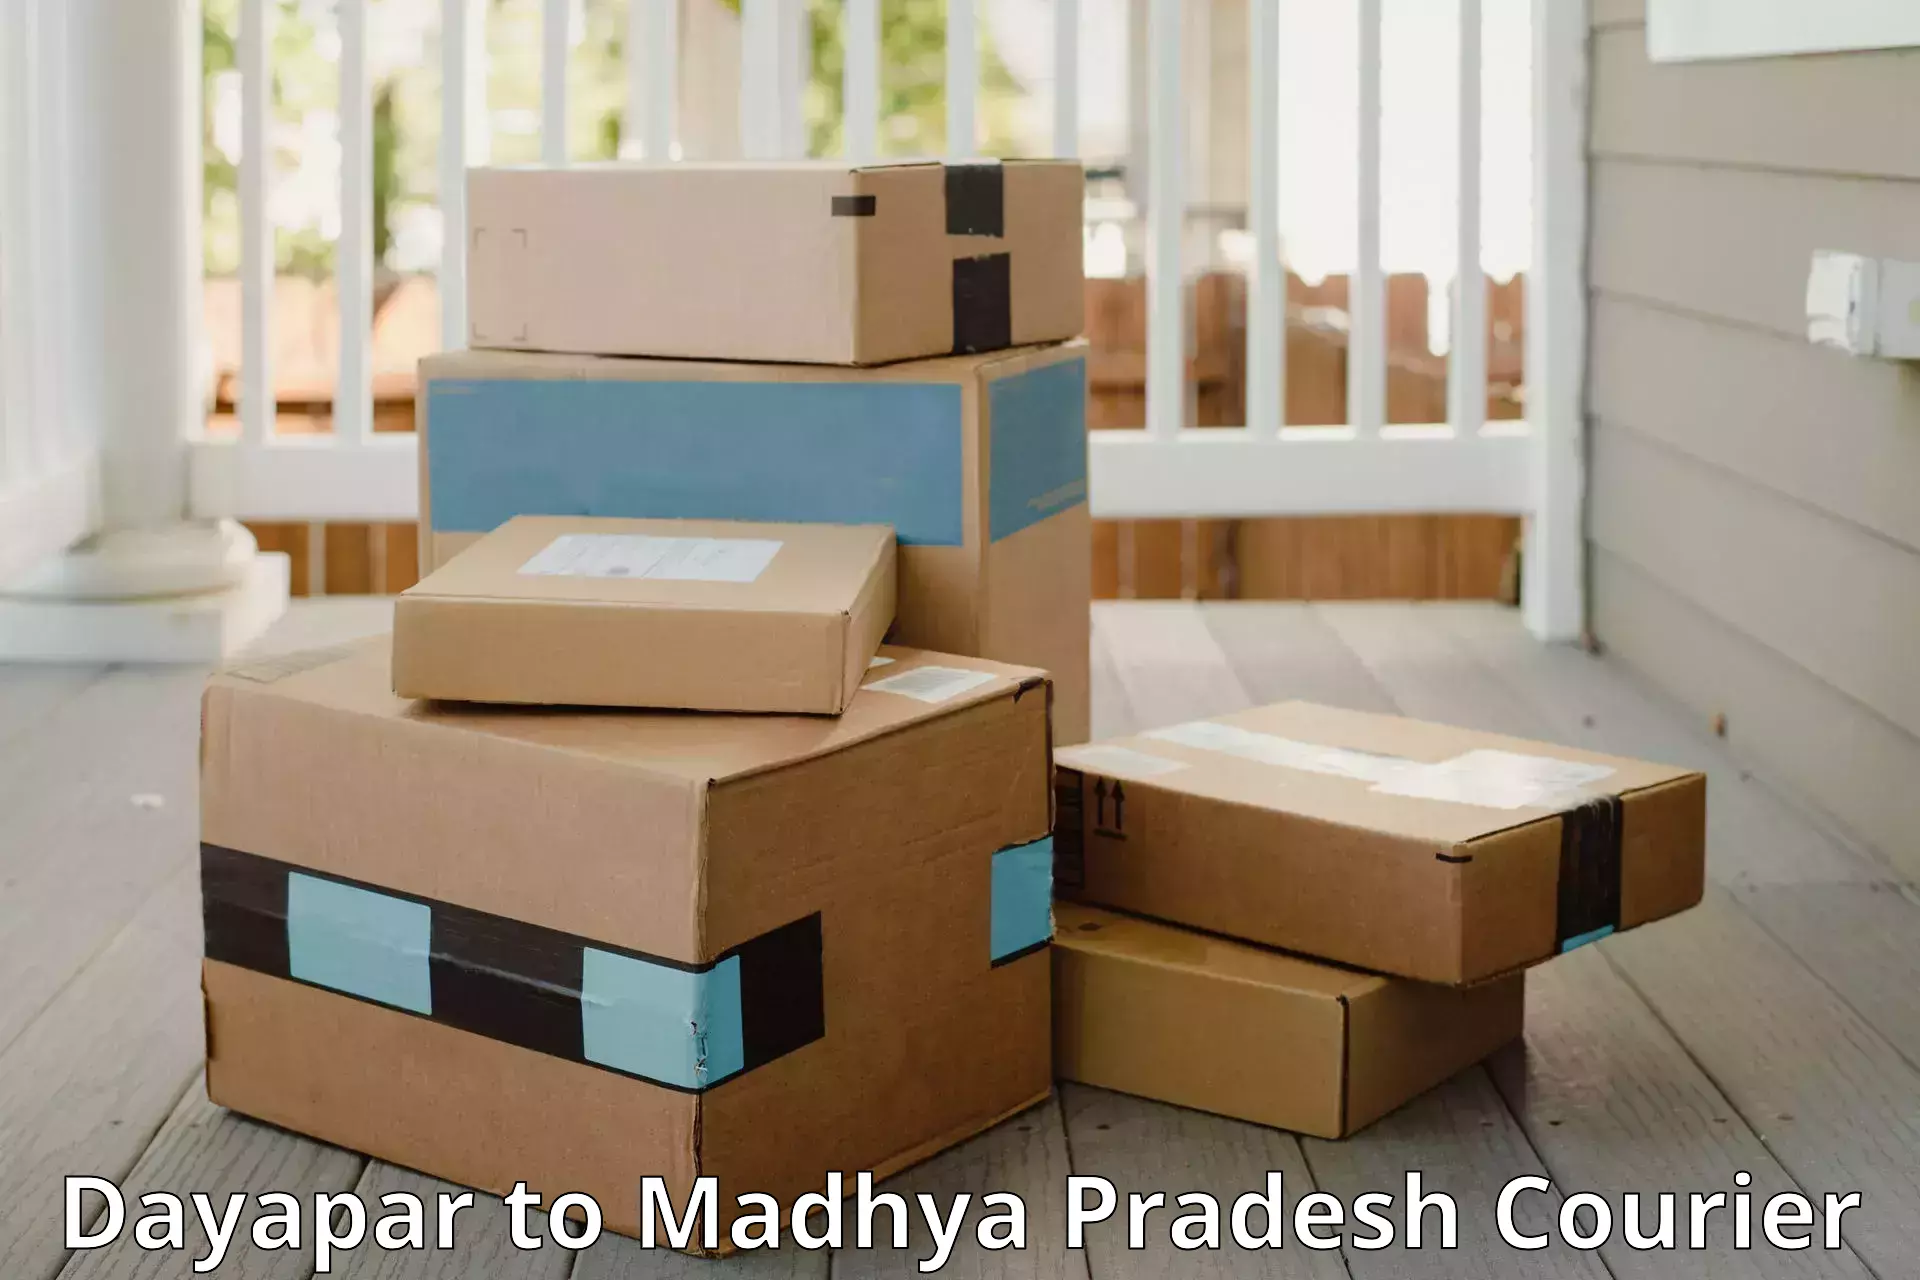 Luggage delivery providers Dayapar to Udaipura